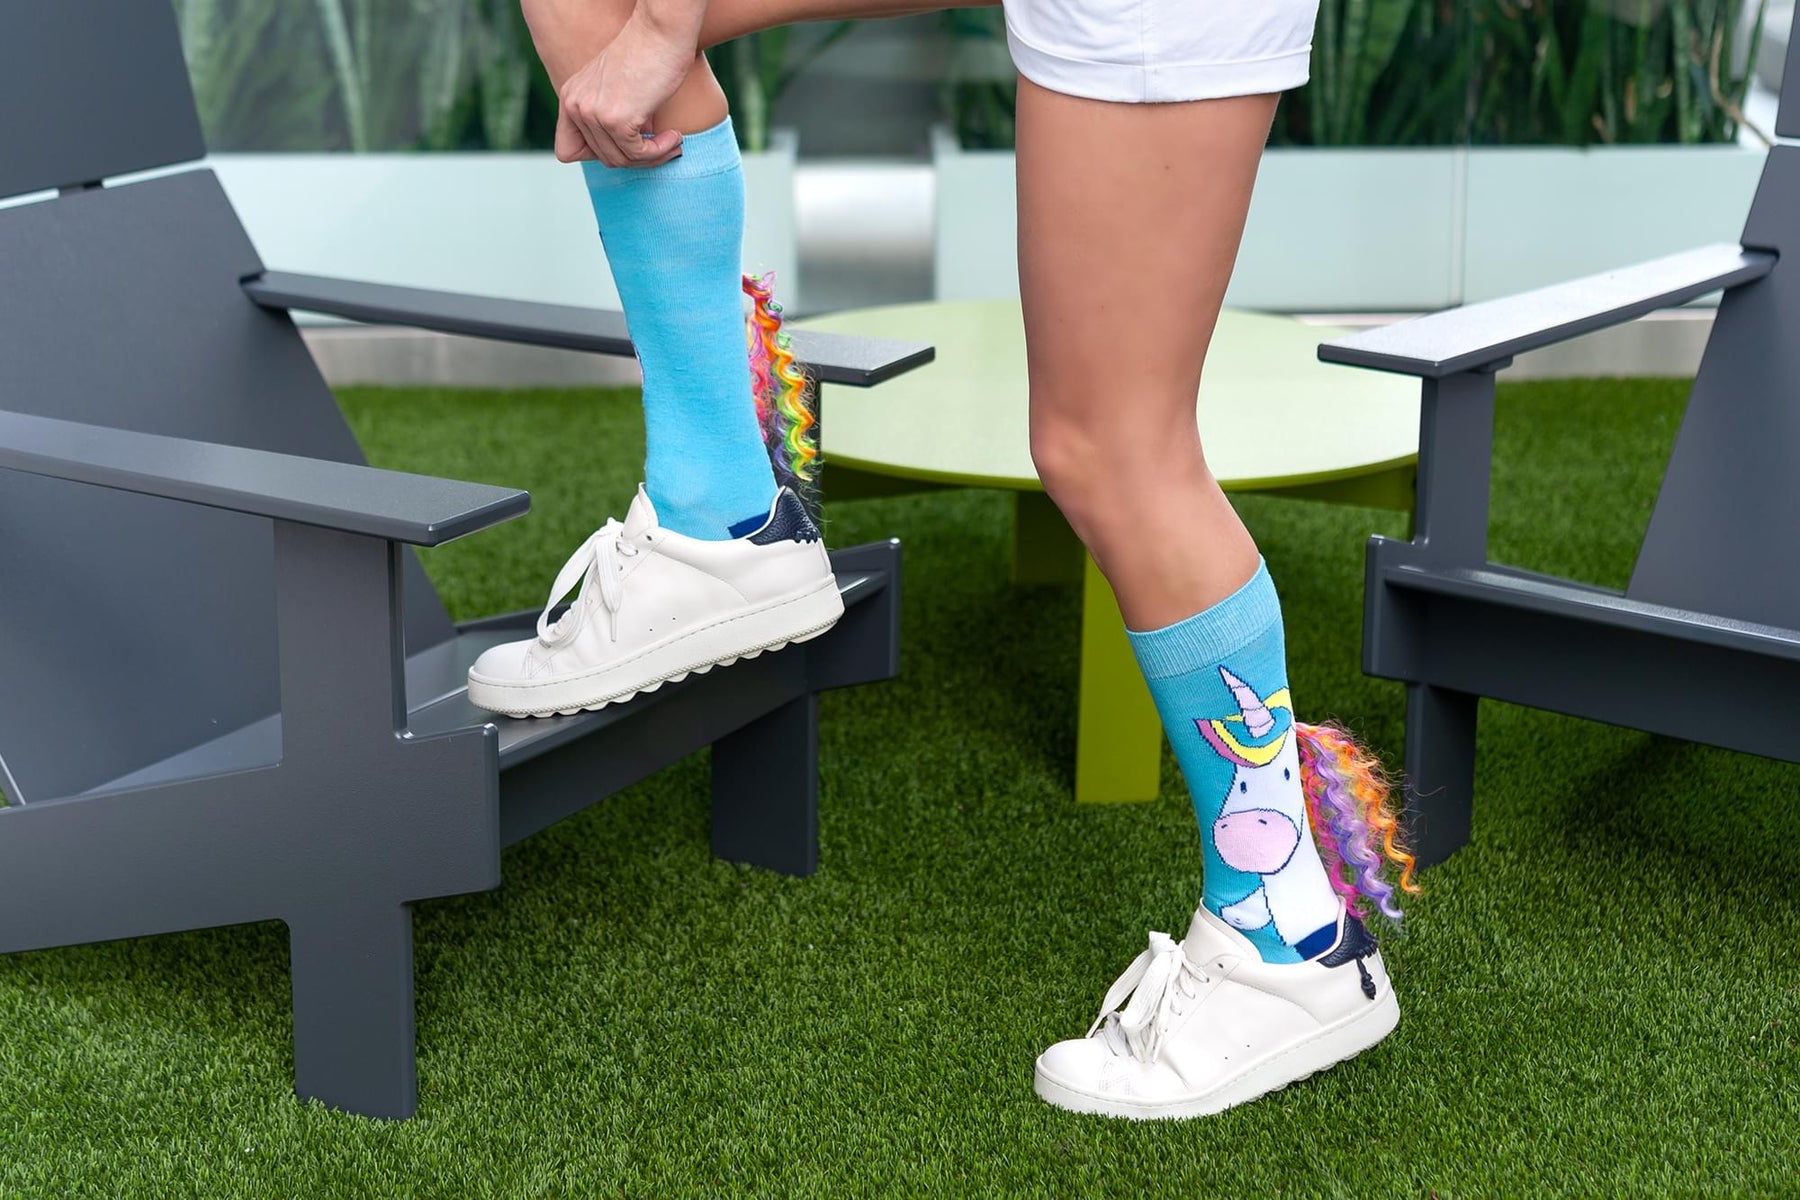 Blue Unicorn with 3D Rainbow Mane Novelty Crew Socks for Men & Women - 1 Pair